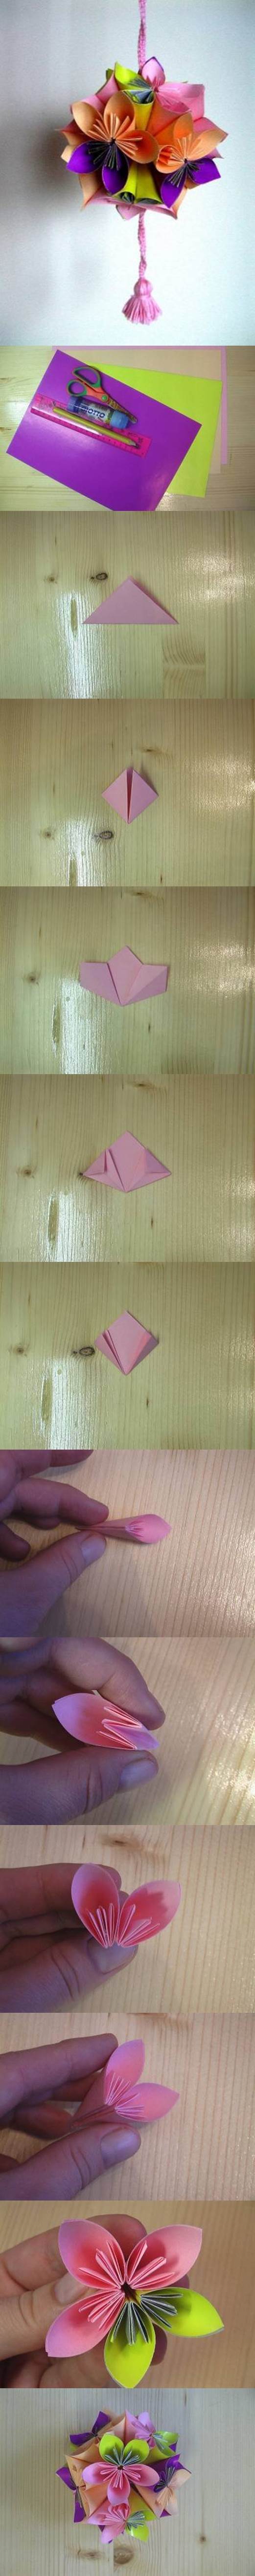 DIY Origami Paper Flower Ball